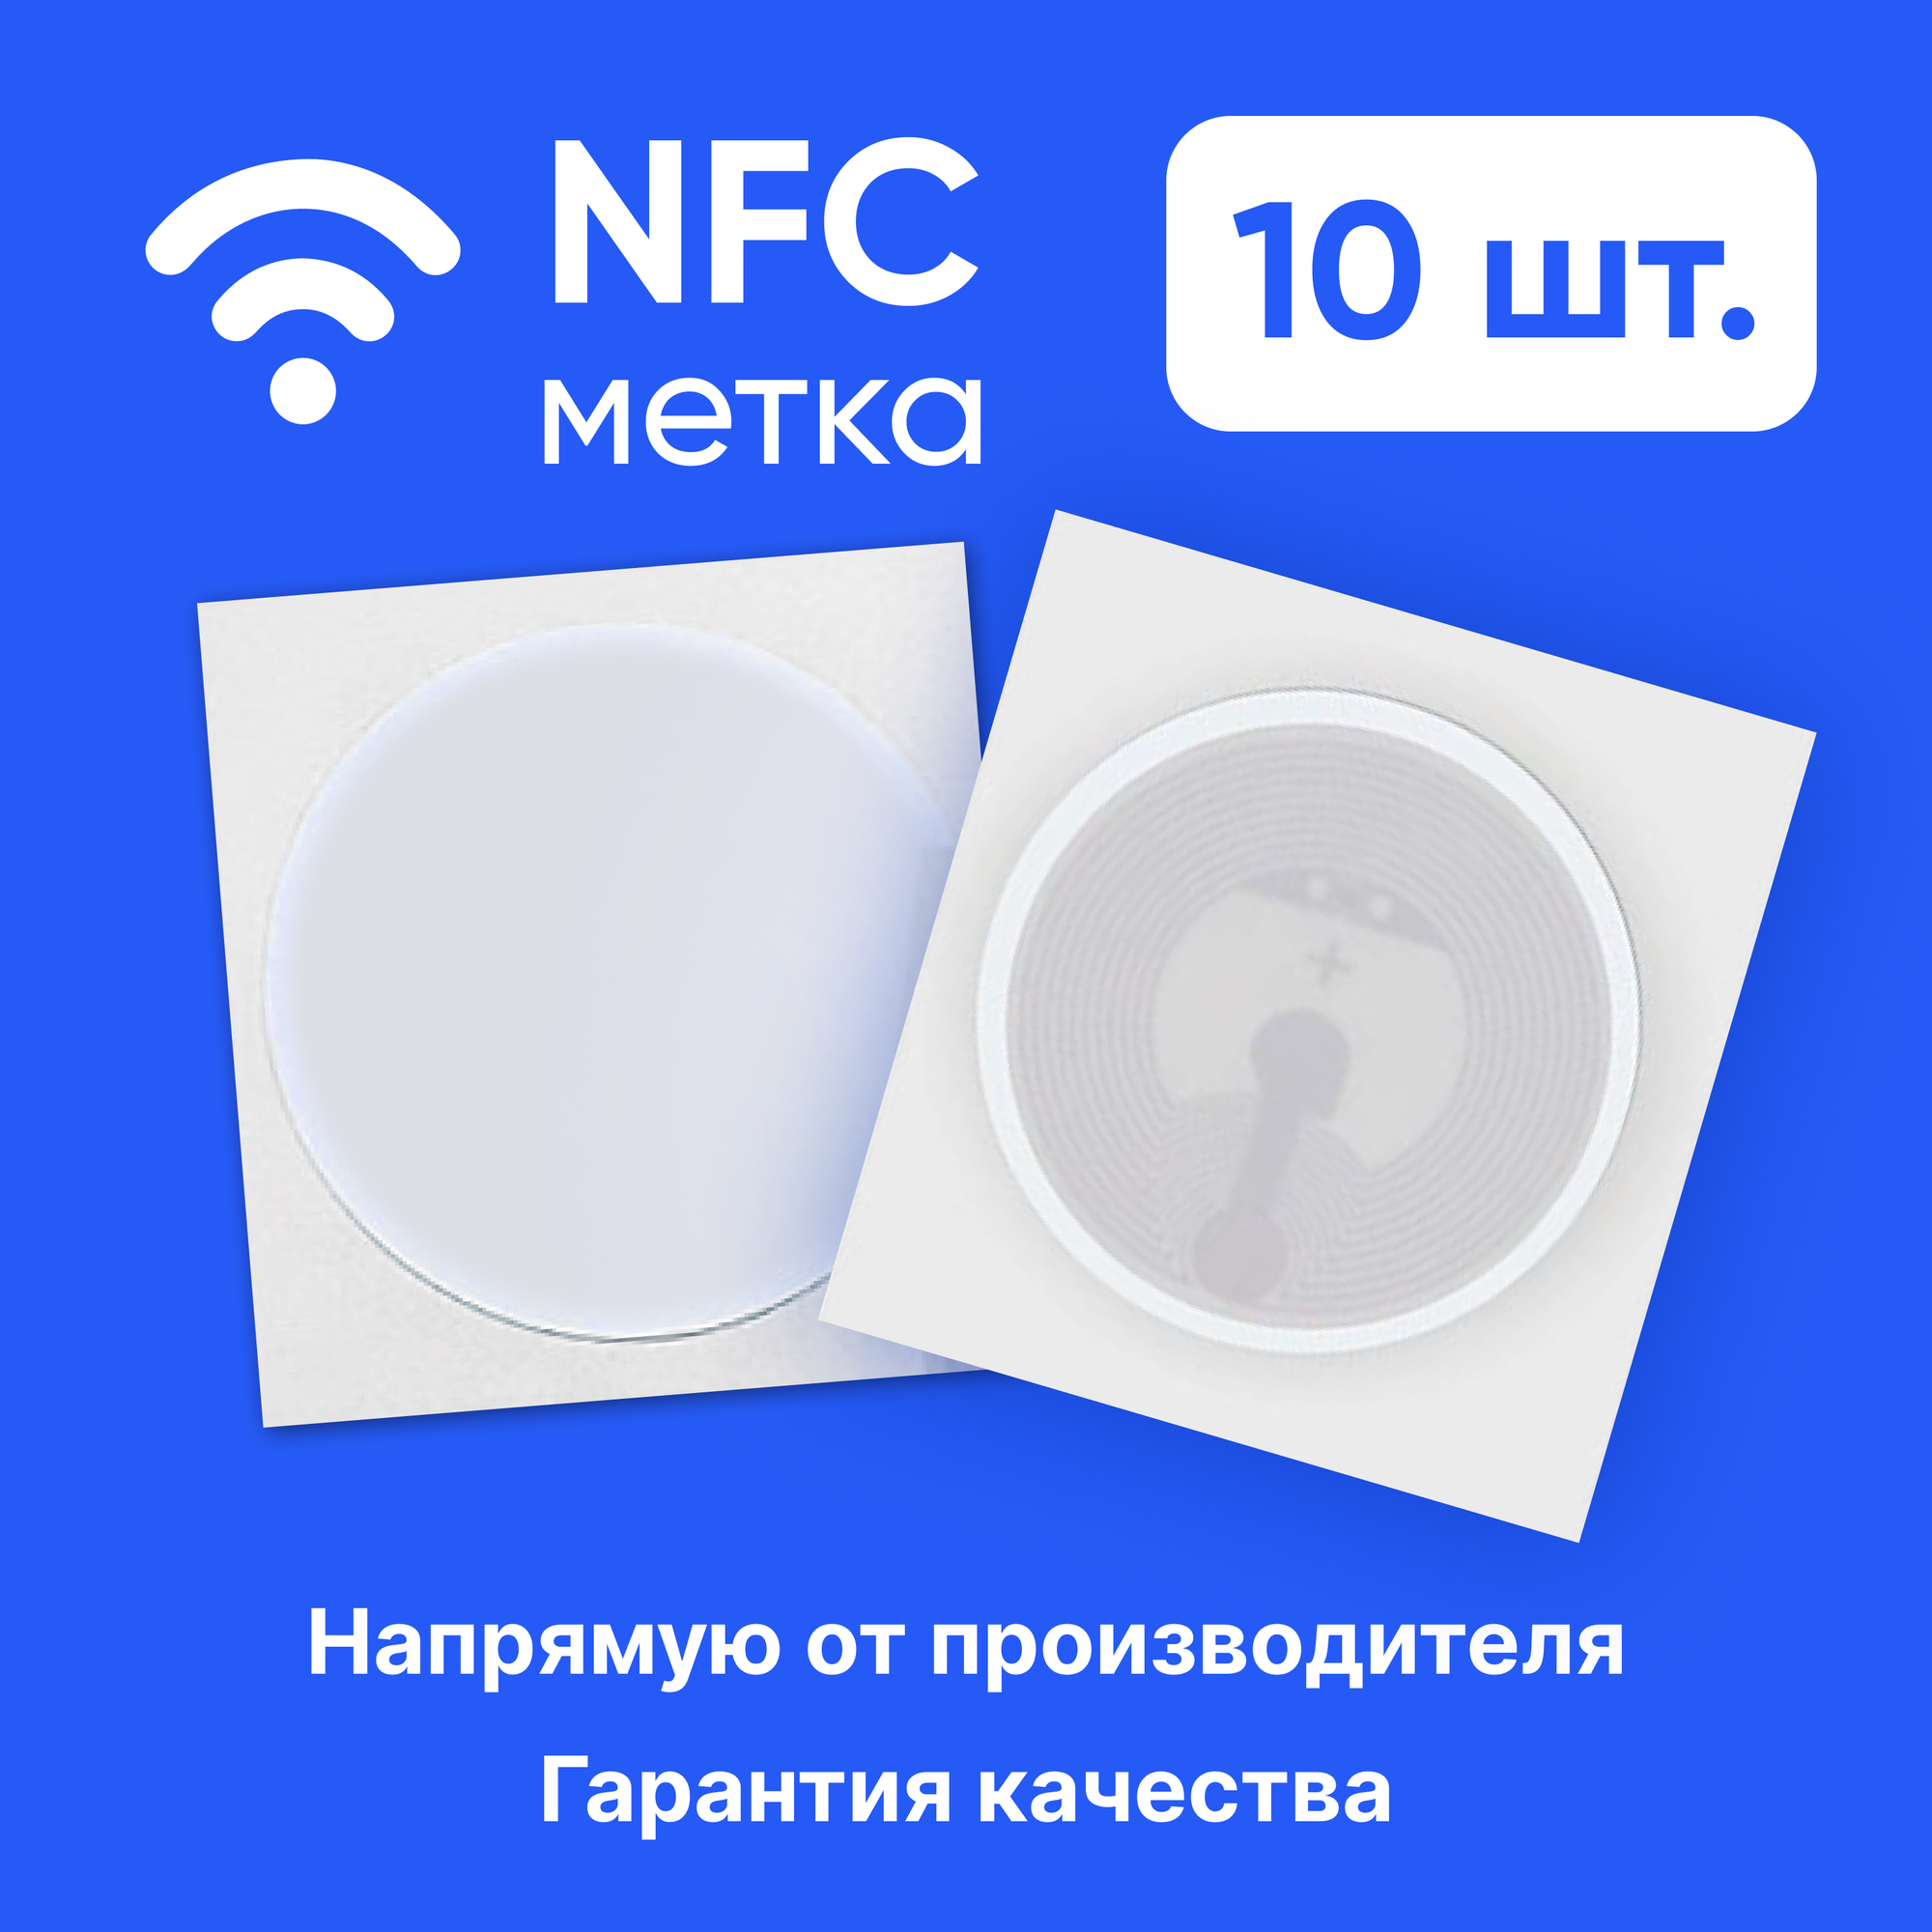 NFC метки для автоматизации, 10 штук